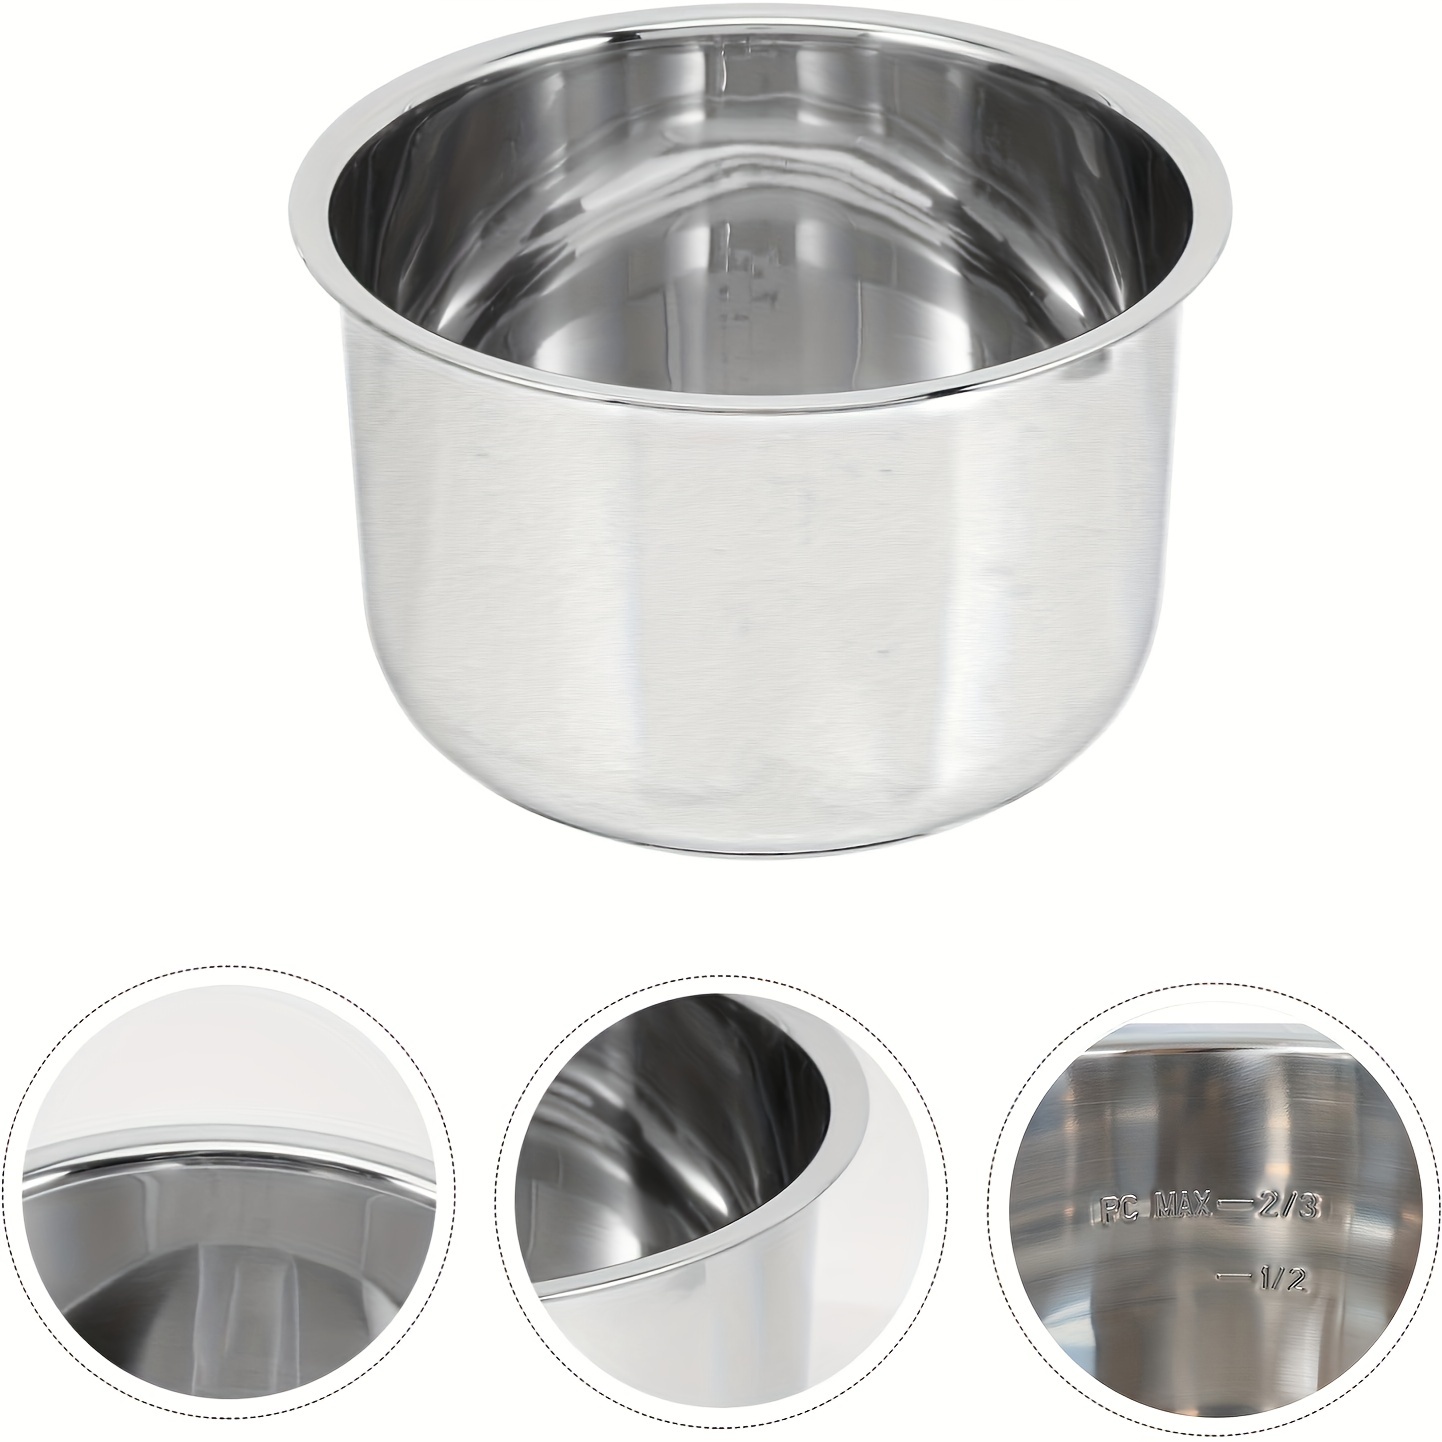 Instant Pot® 6-quart Stainless Steel Inner Cooking Pot